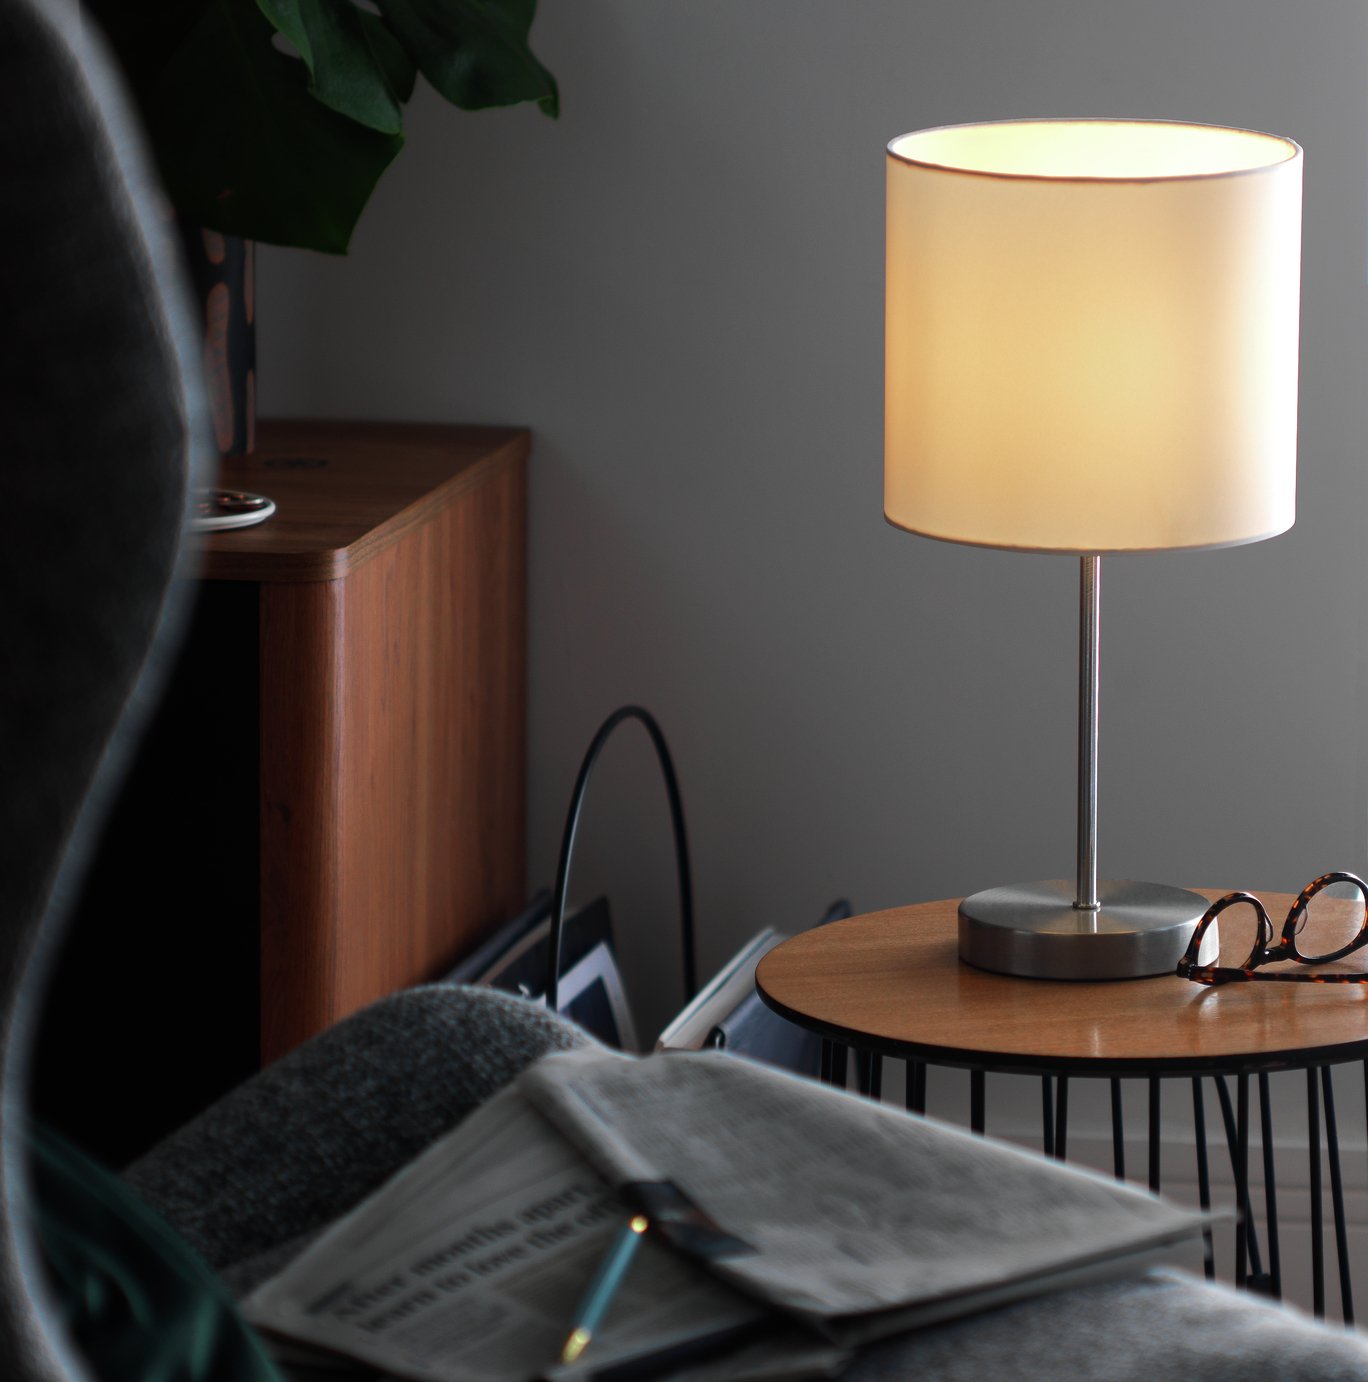 Argos Home Satin Stick Table Lamp - Natural